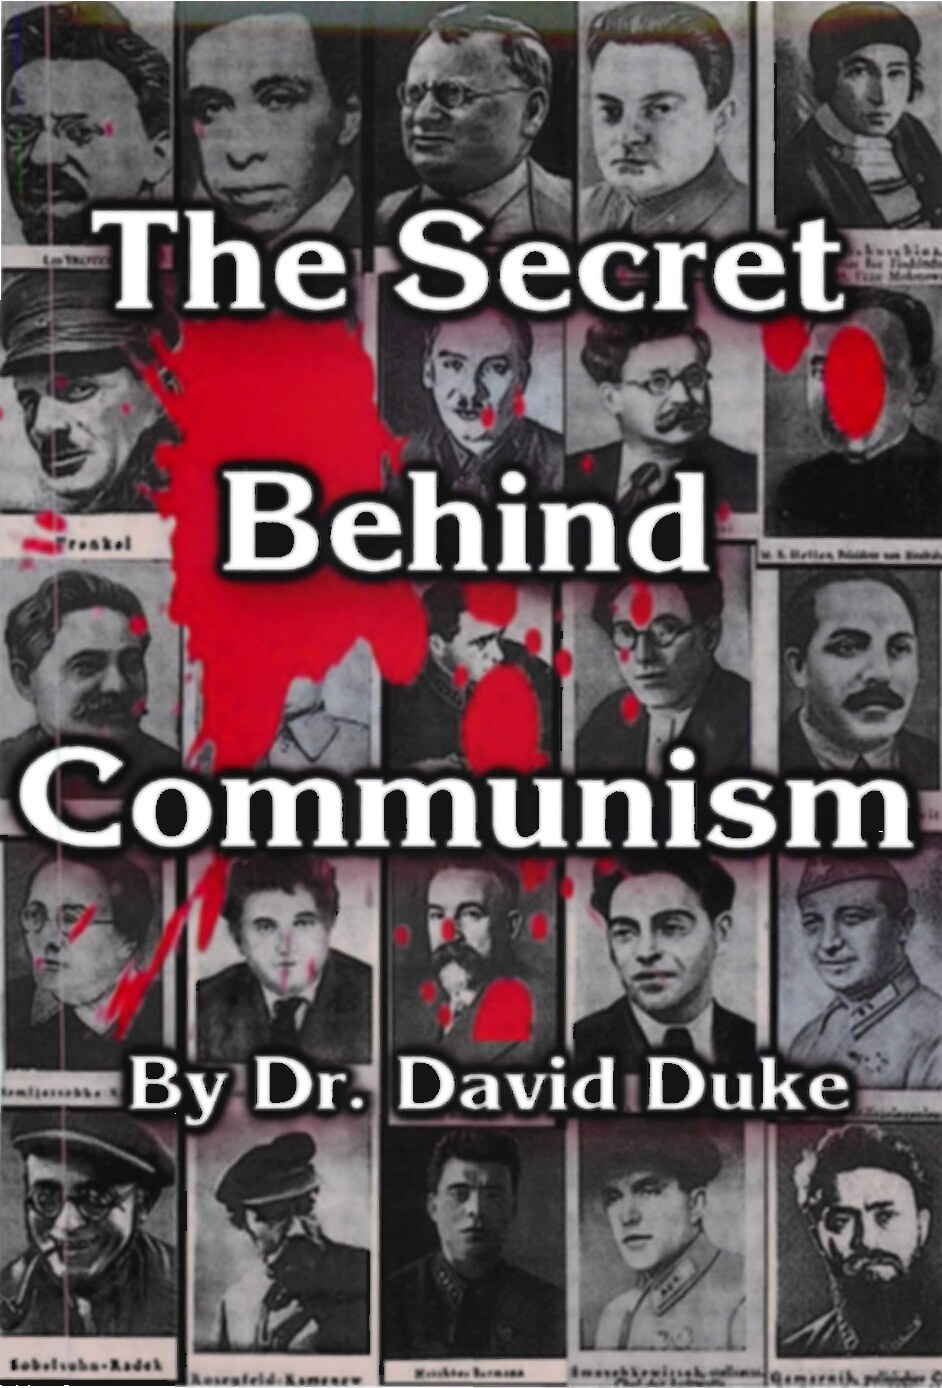 The Secret Behind Communism - David Duke (2013)